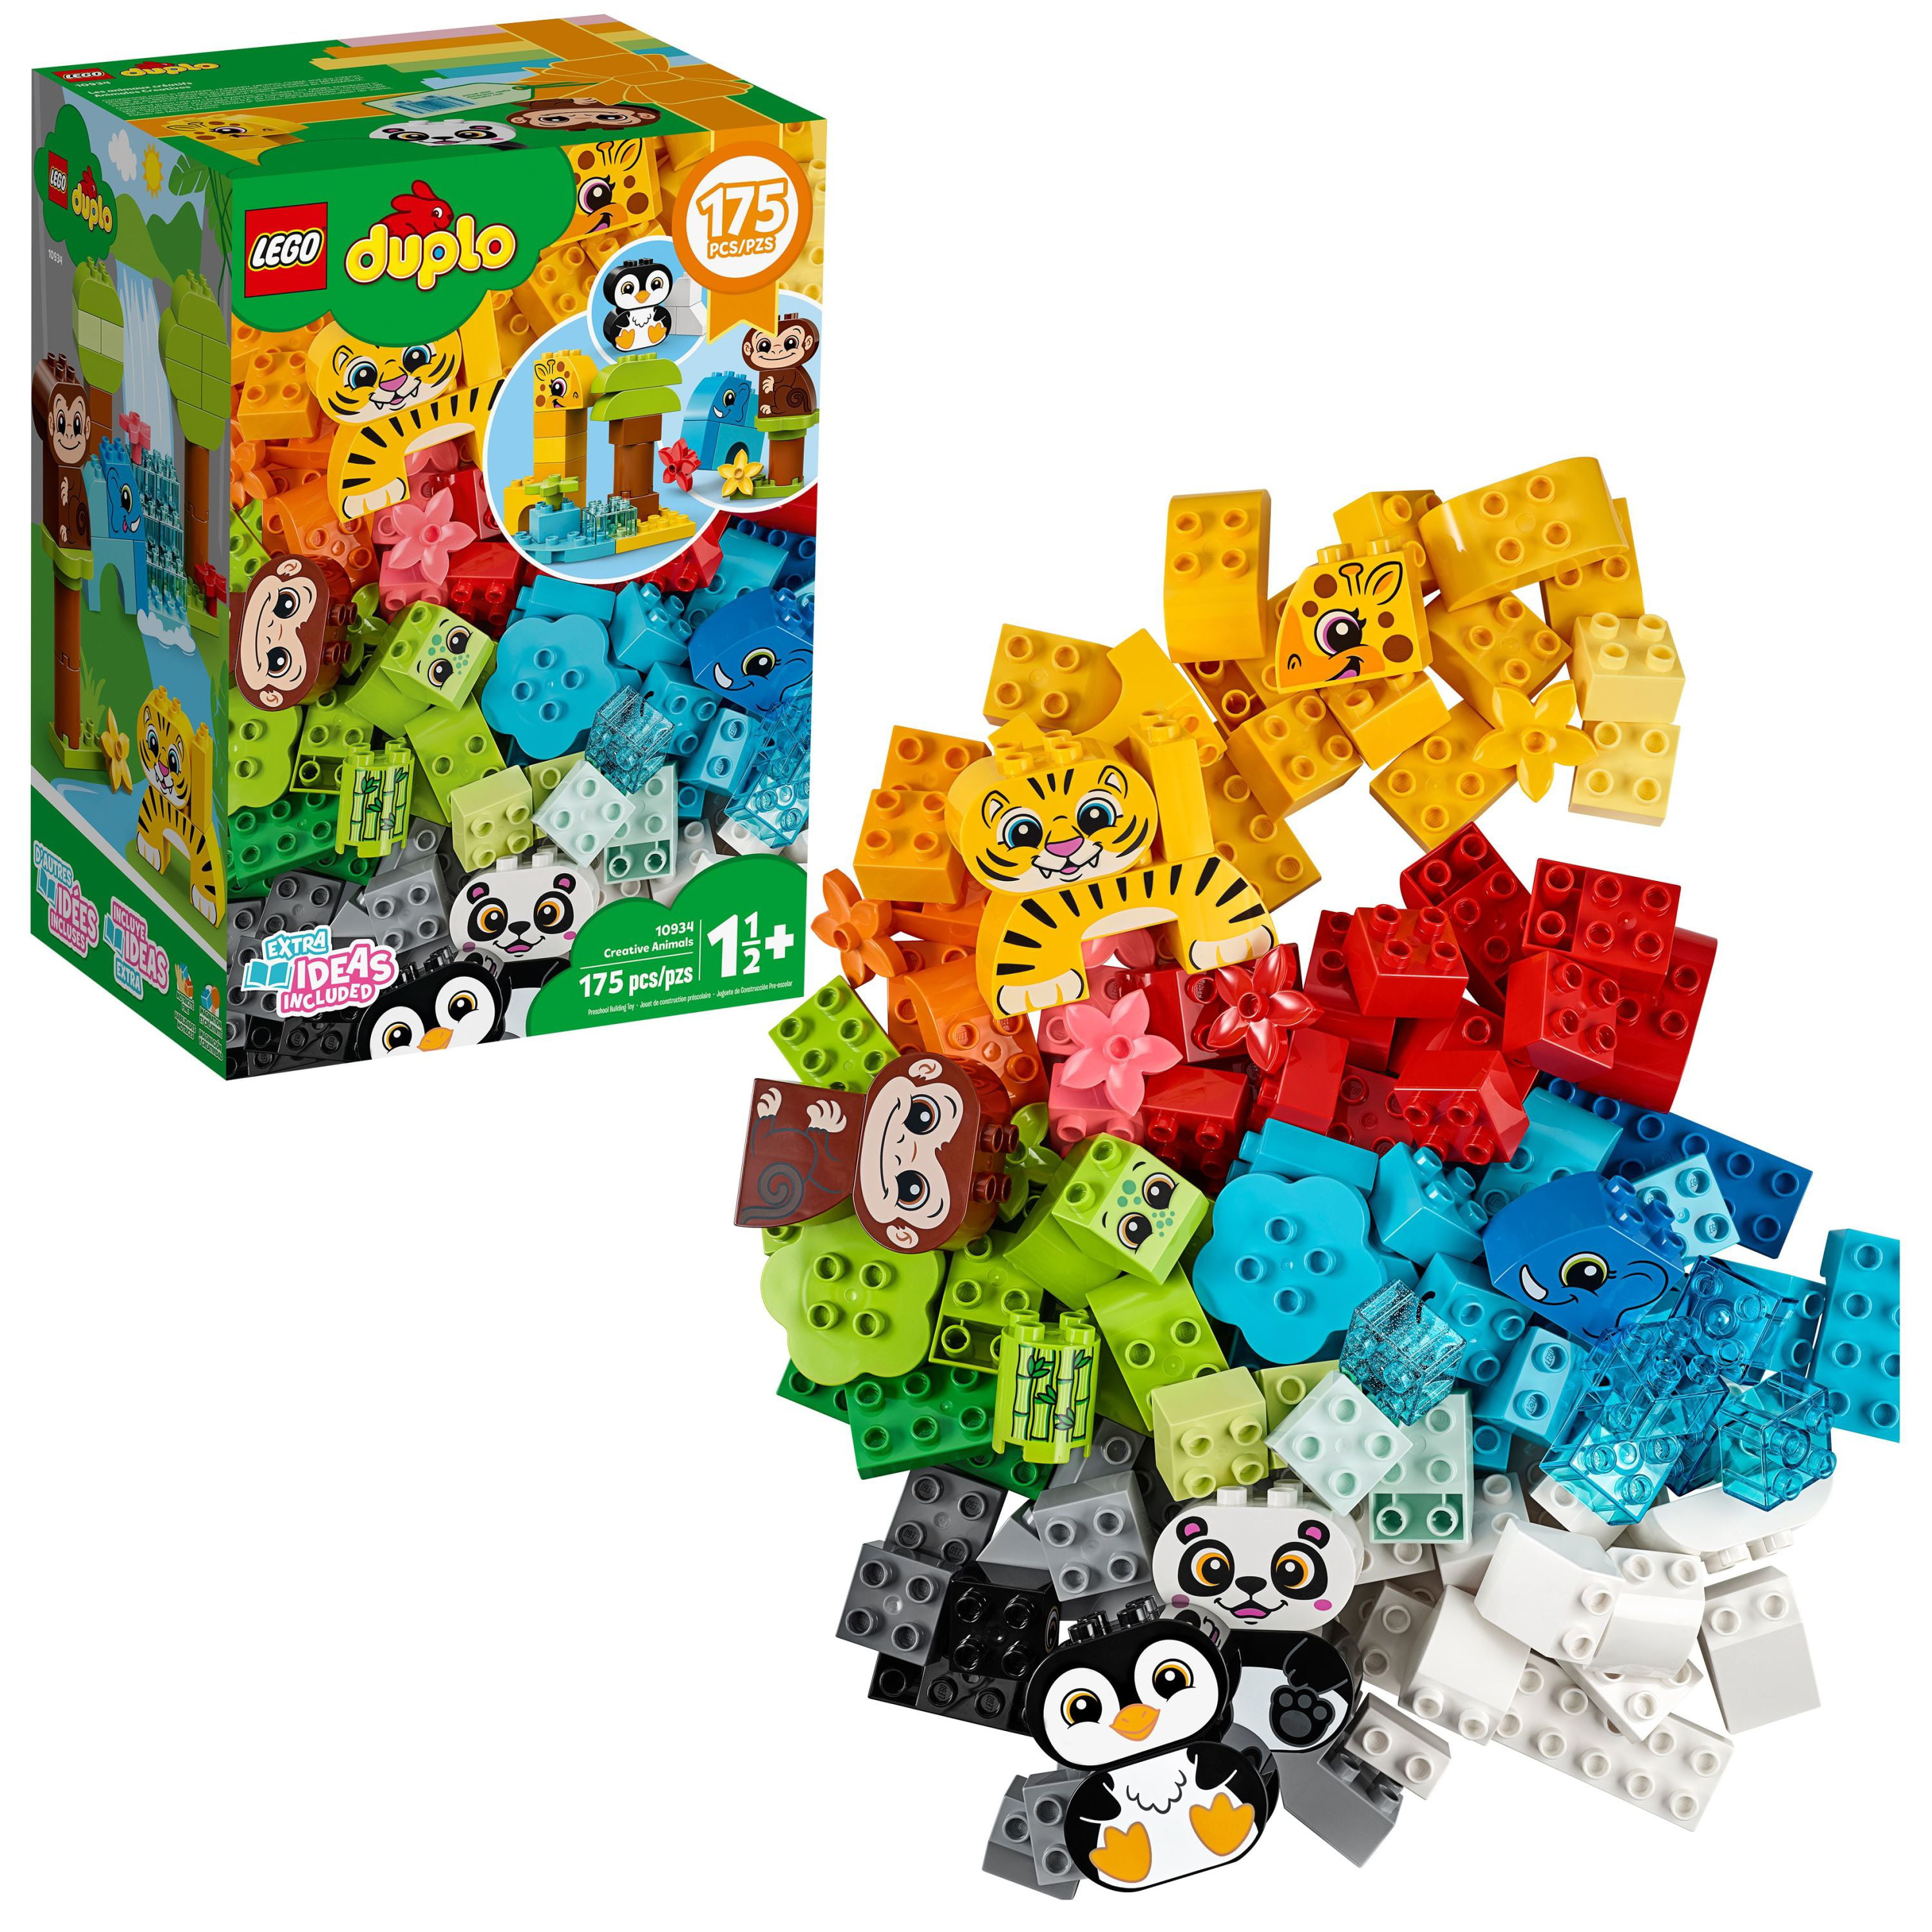 LEGO DUPLO Classic Creative Animals 10934 Building Toy Set (175 Pieces) - $19